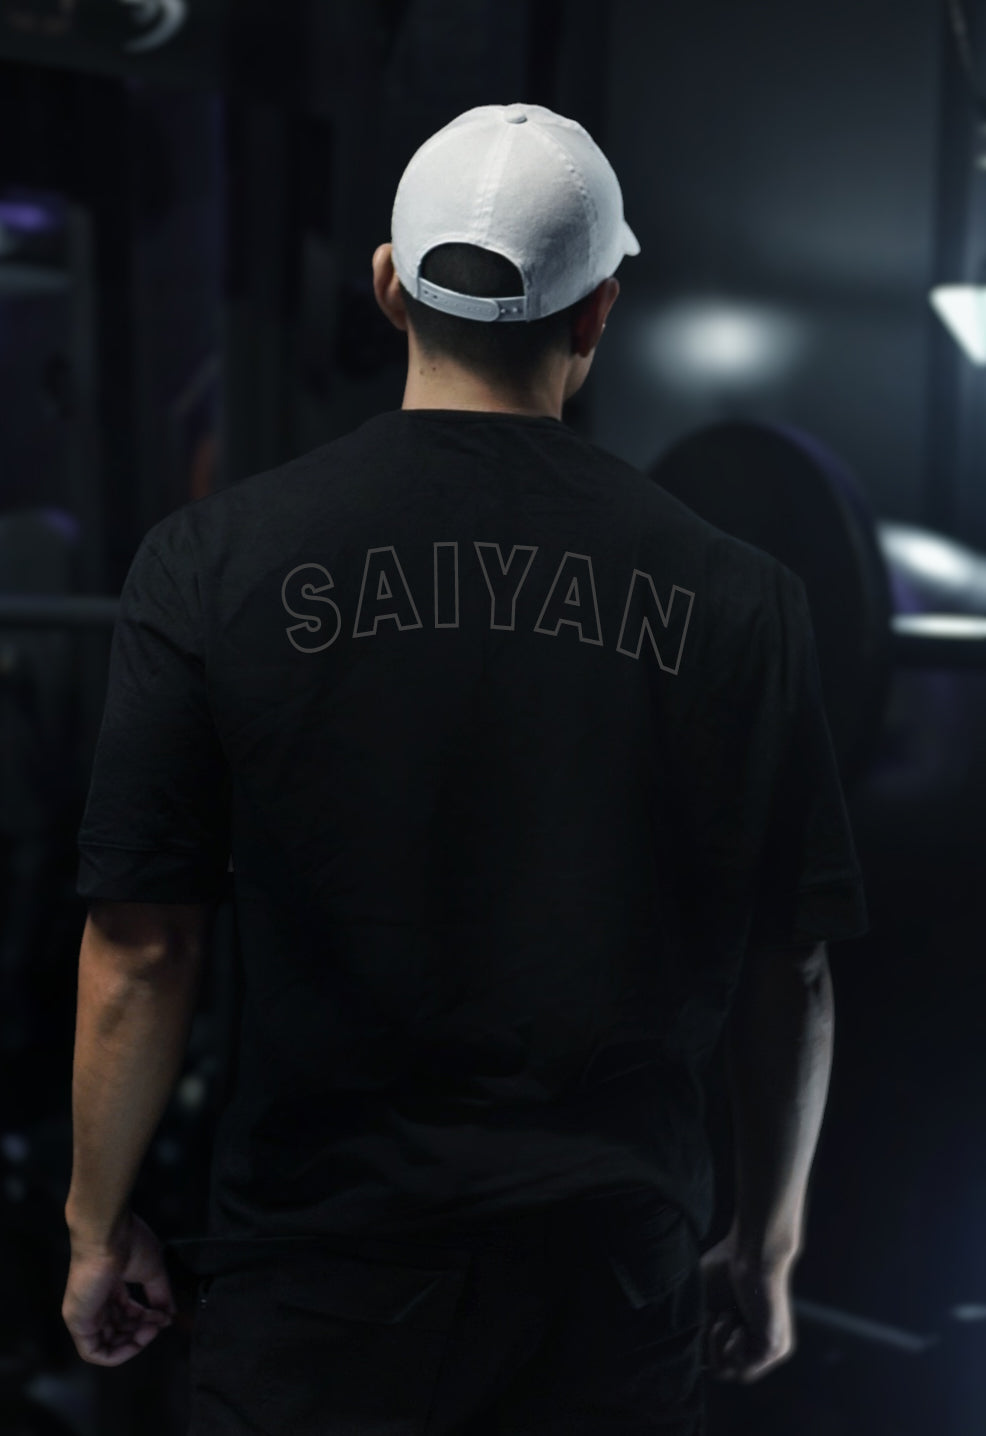 [NEW ARRIVAL] Oversized 'Saiyan Legends' Comfort Pump Cover Tshirt - Black